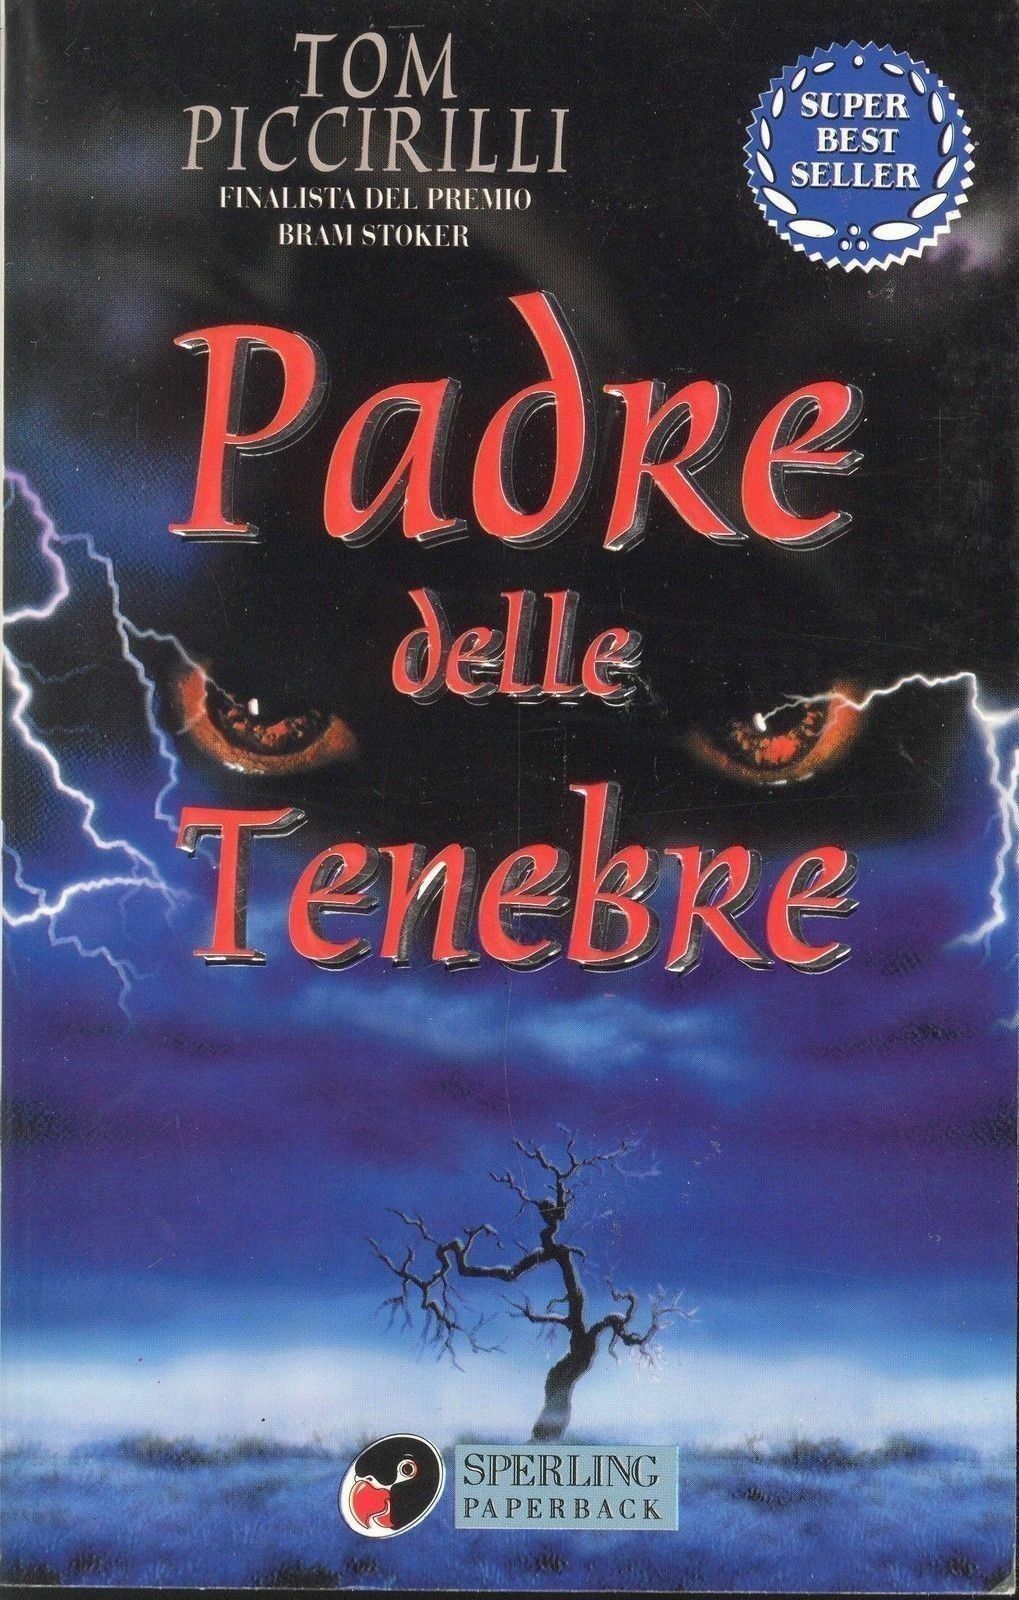   Padre delle tenebre - Tom Piccirilli,  1995,  Sperling & Kupfer 